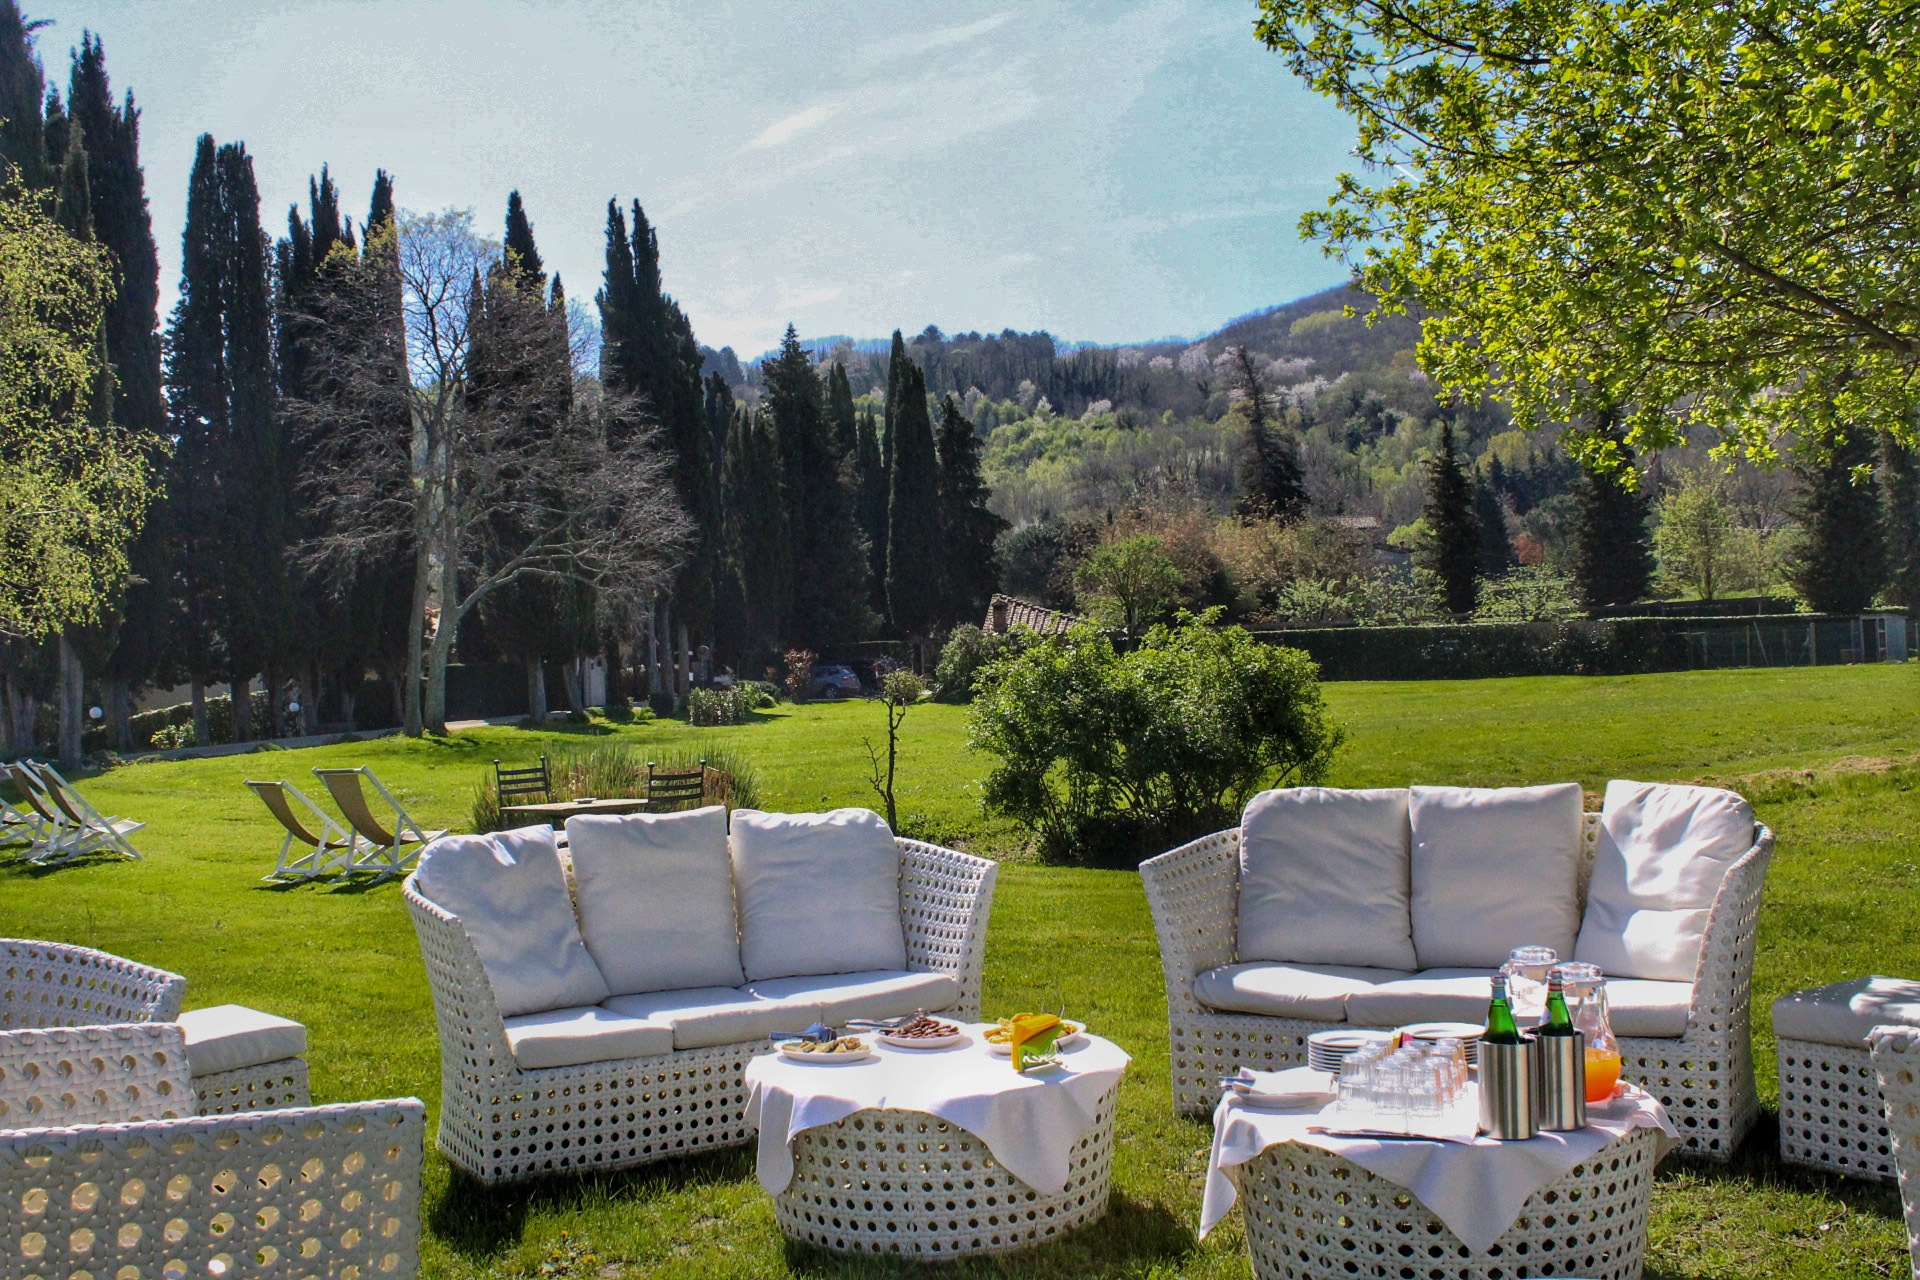 The 2018 season of Villa Campestri Olive Oil Resort